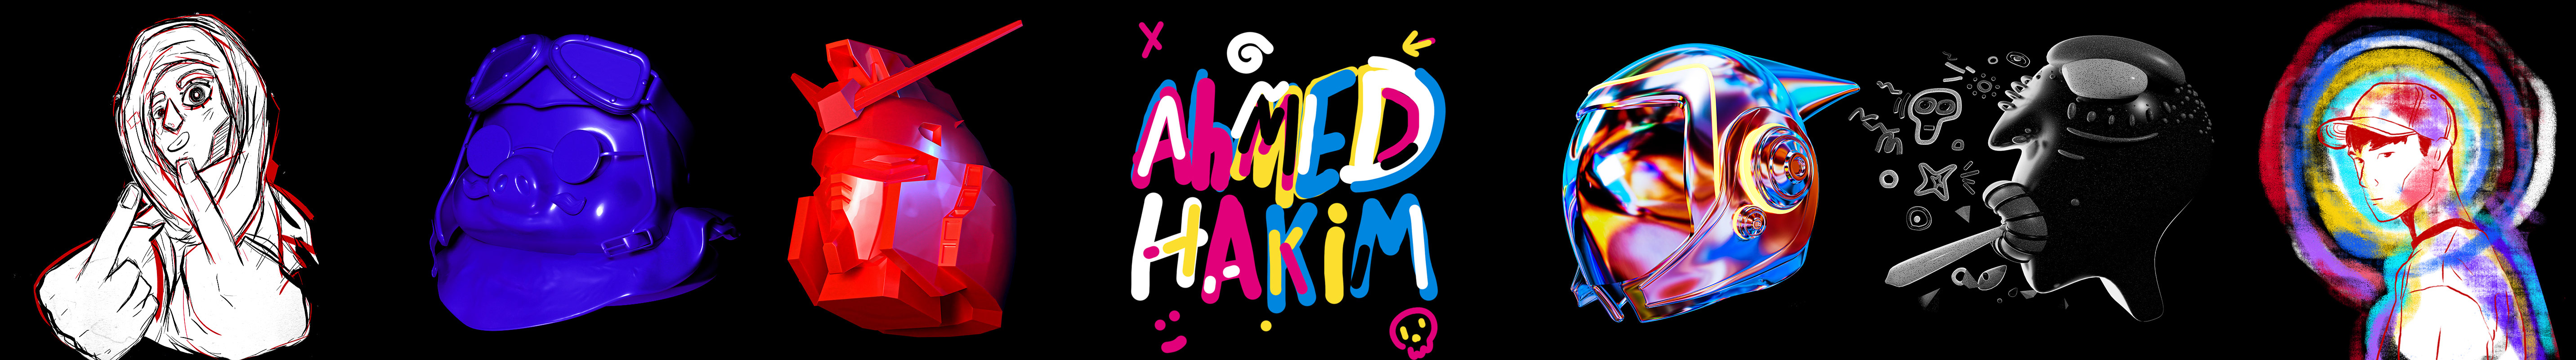 Ahmed Hakim's profile banner